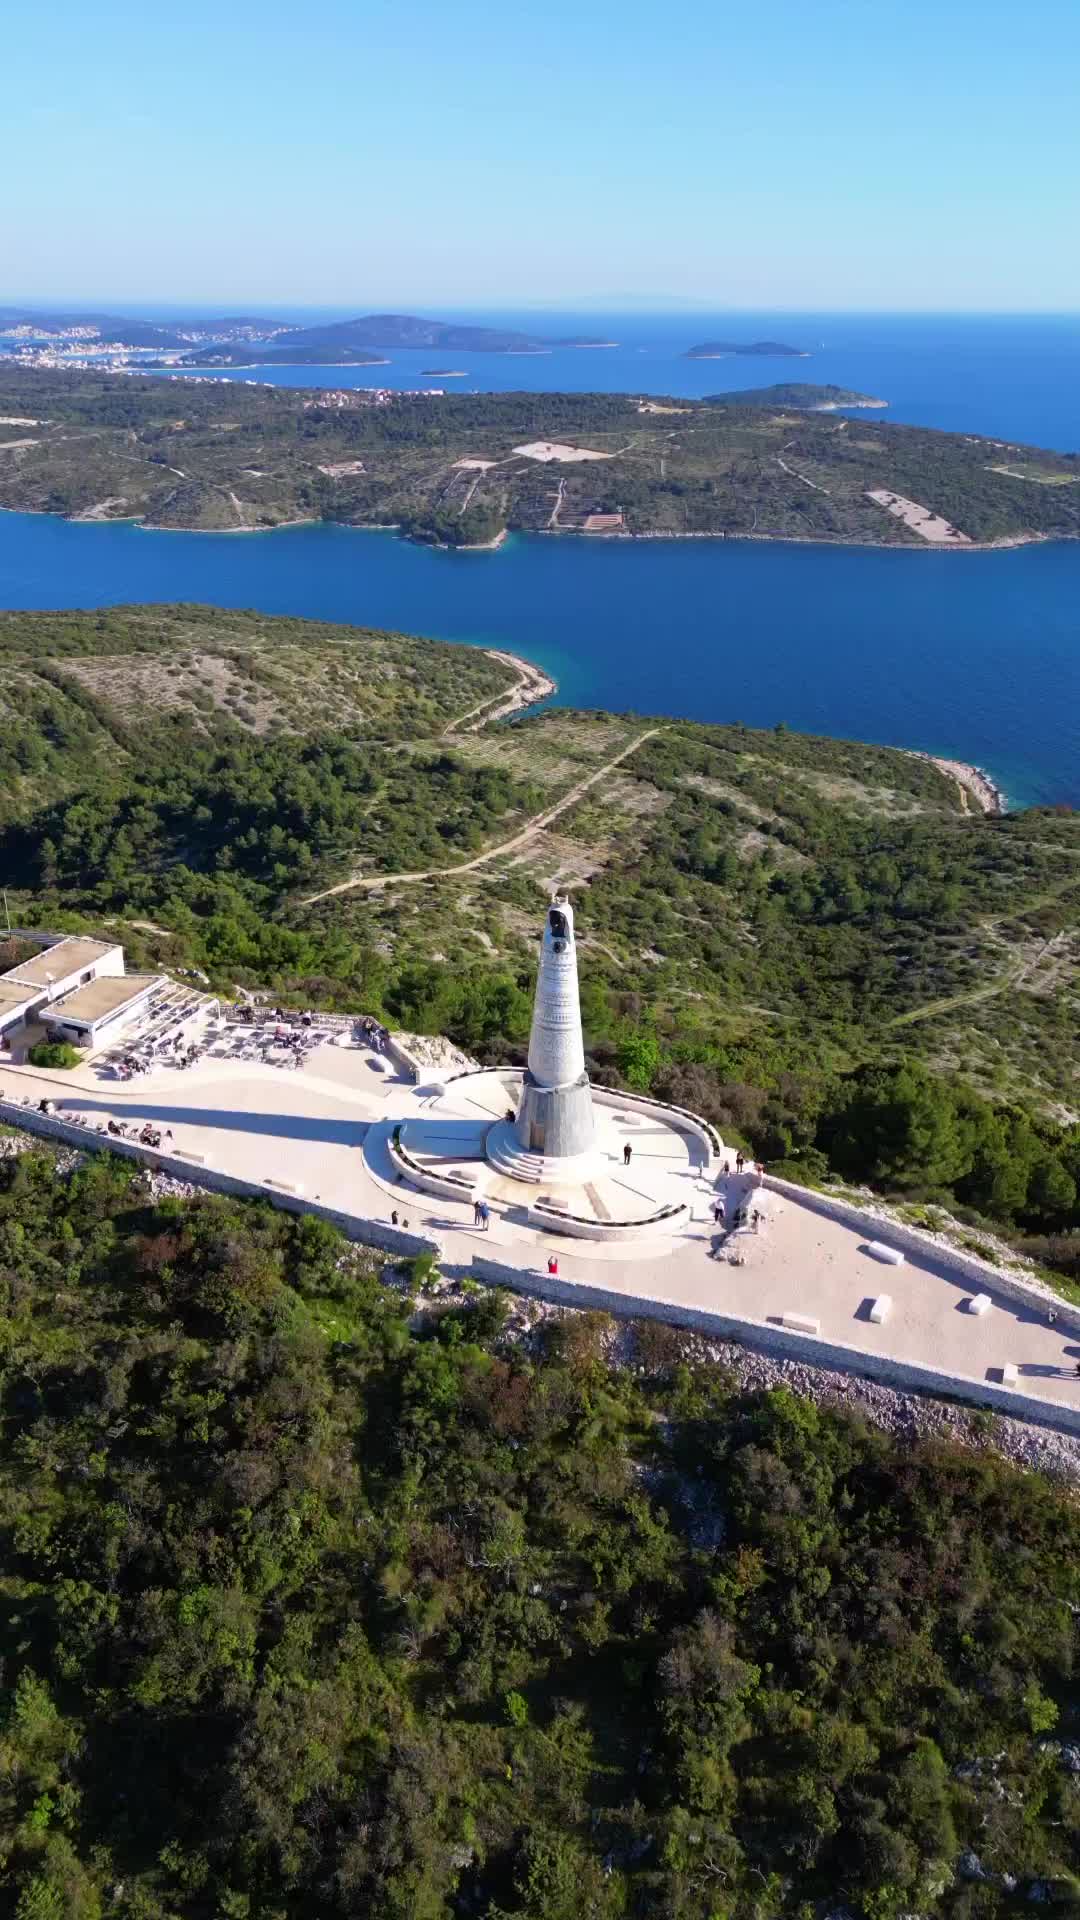 Drone Tour of Gospa od Loreta in Primošten, Croatia